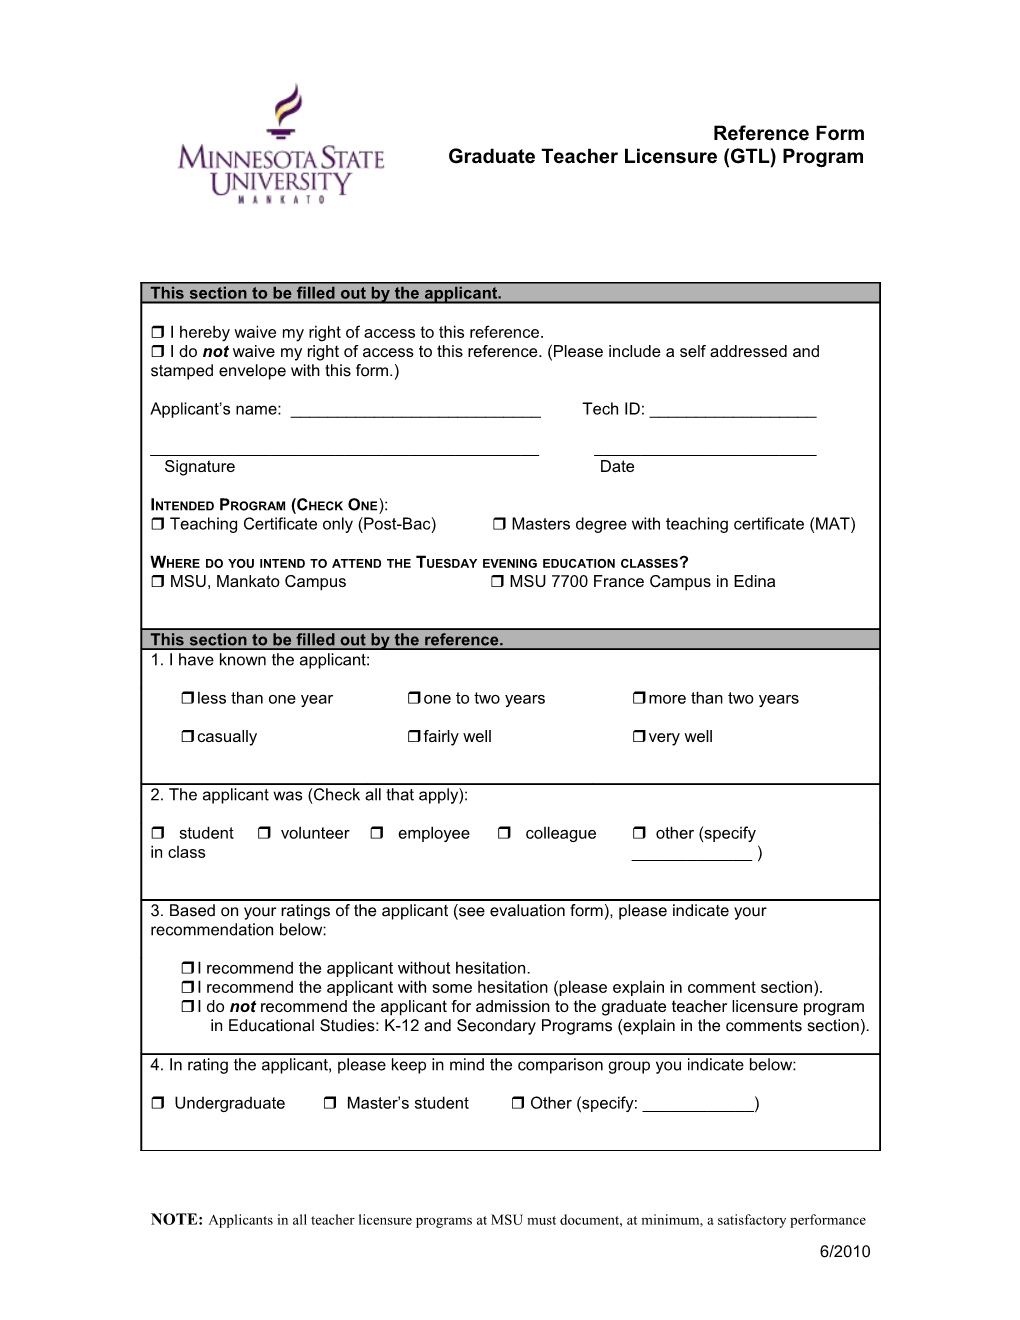 Graduate Teacher Licensure (GTL) Program